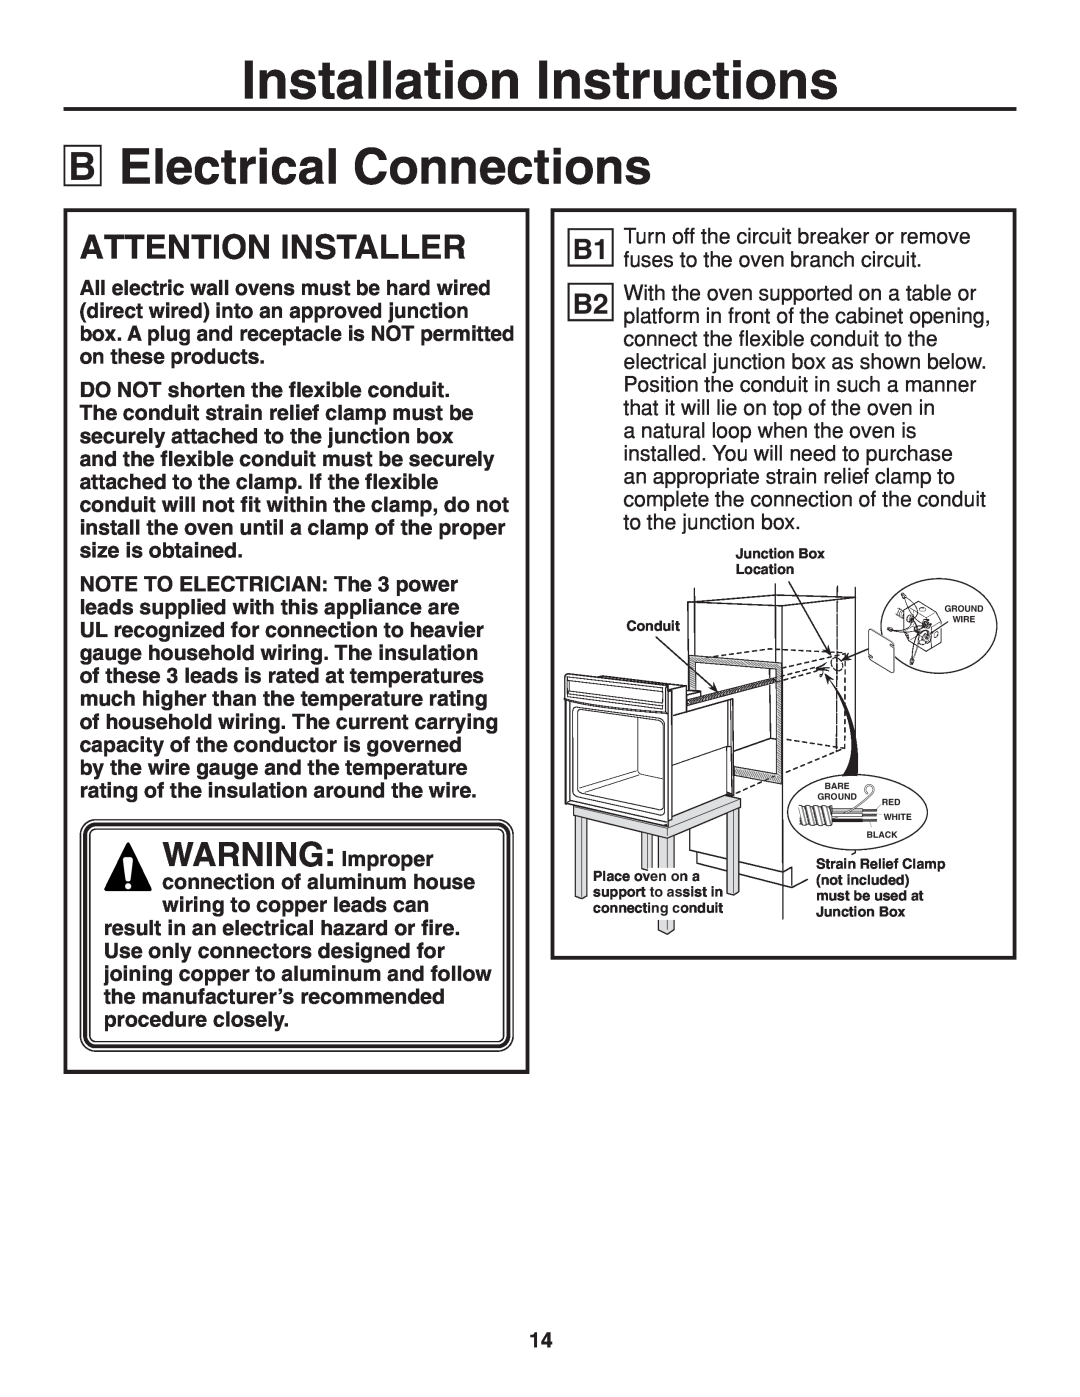 GE r08654v-1 Electrical Connections, WARNING Improper, Installation Instructions, Attention Installer 